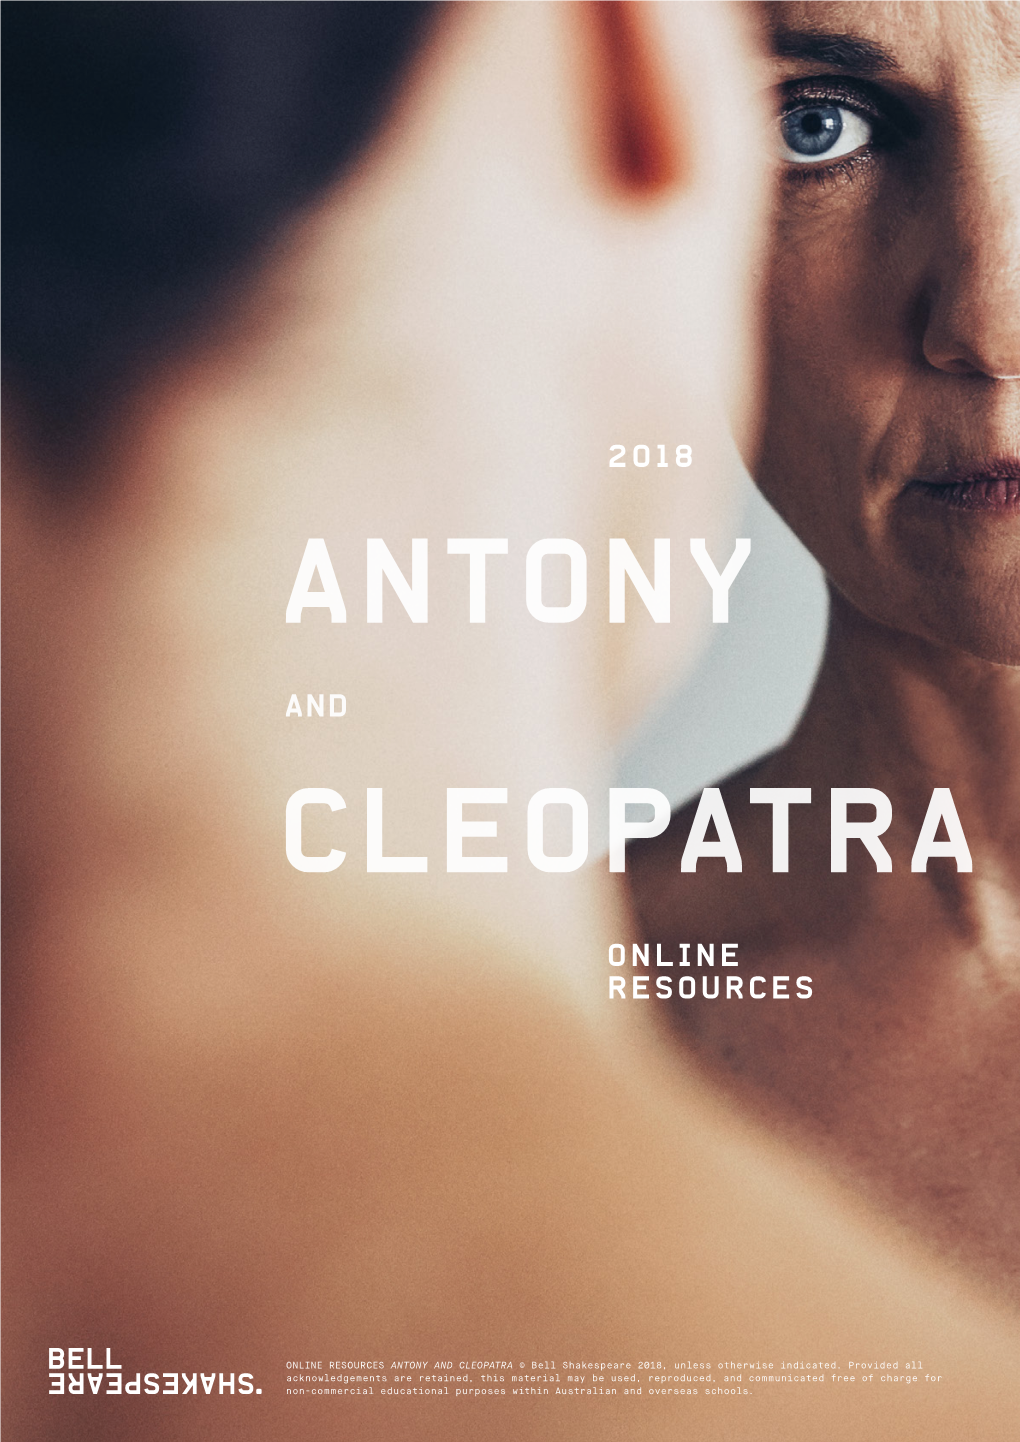 Antony and Cleopatra 2018 Online Resources 2